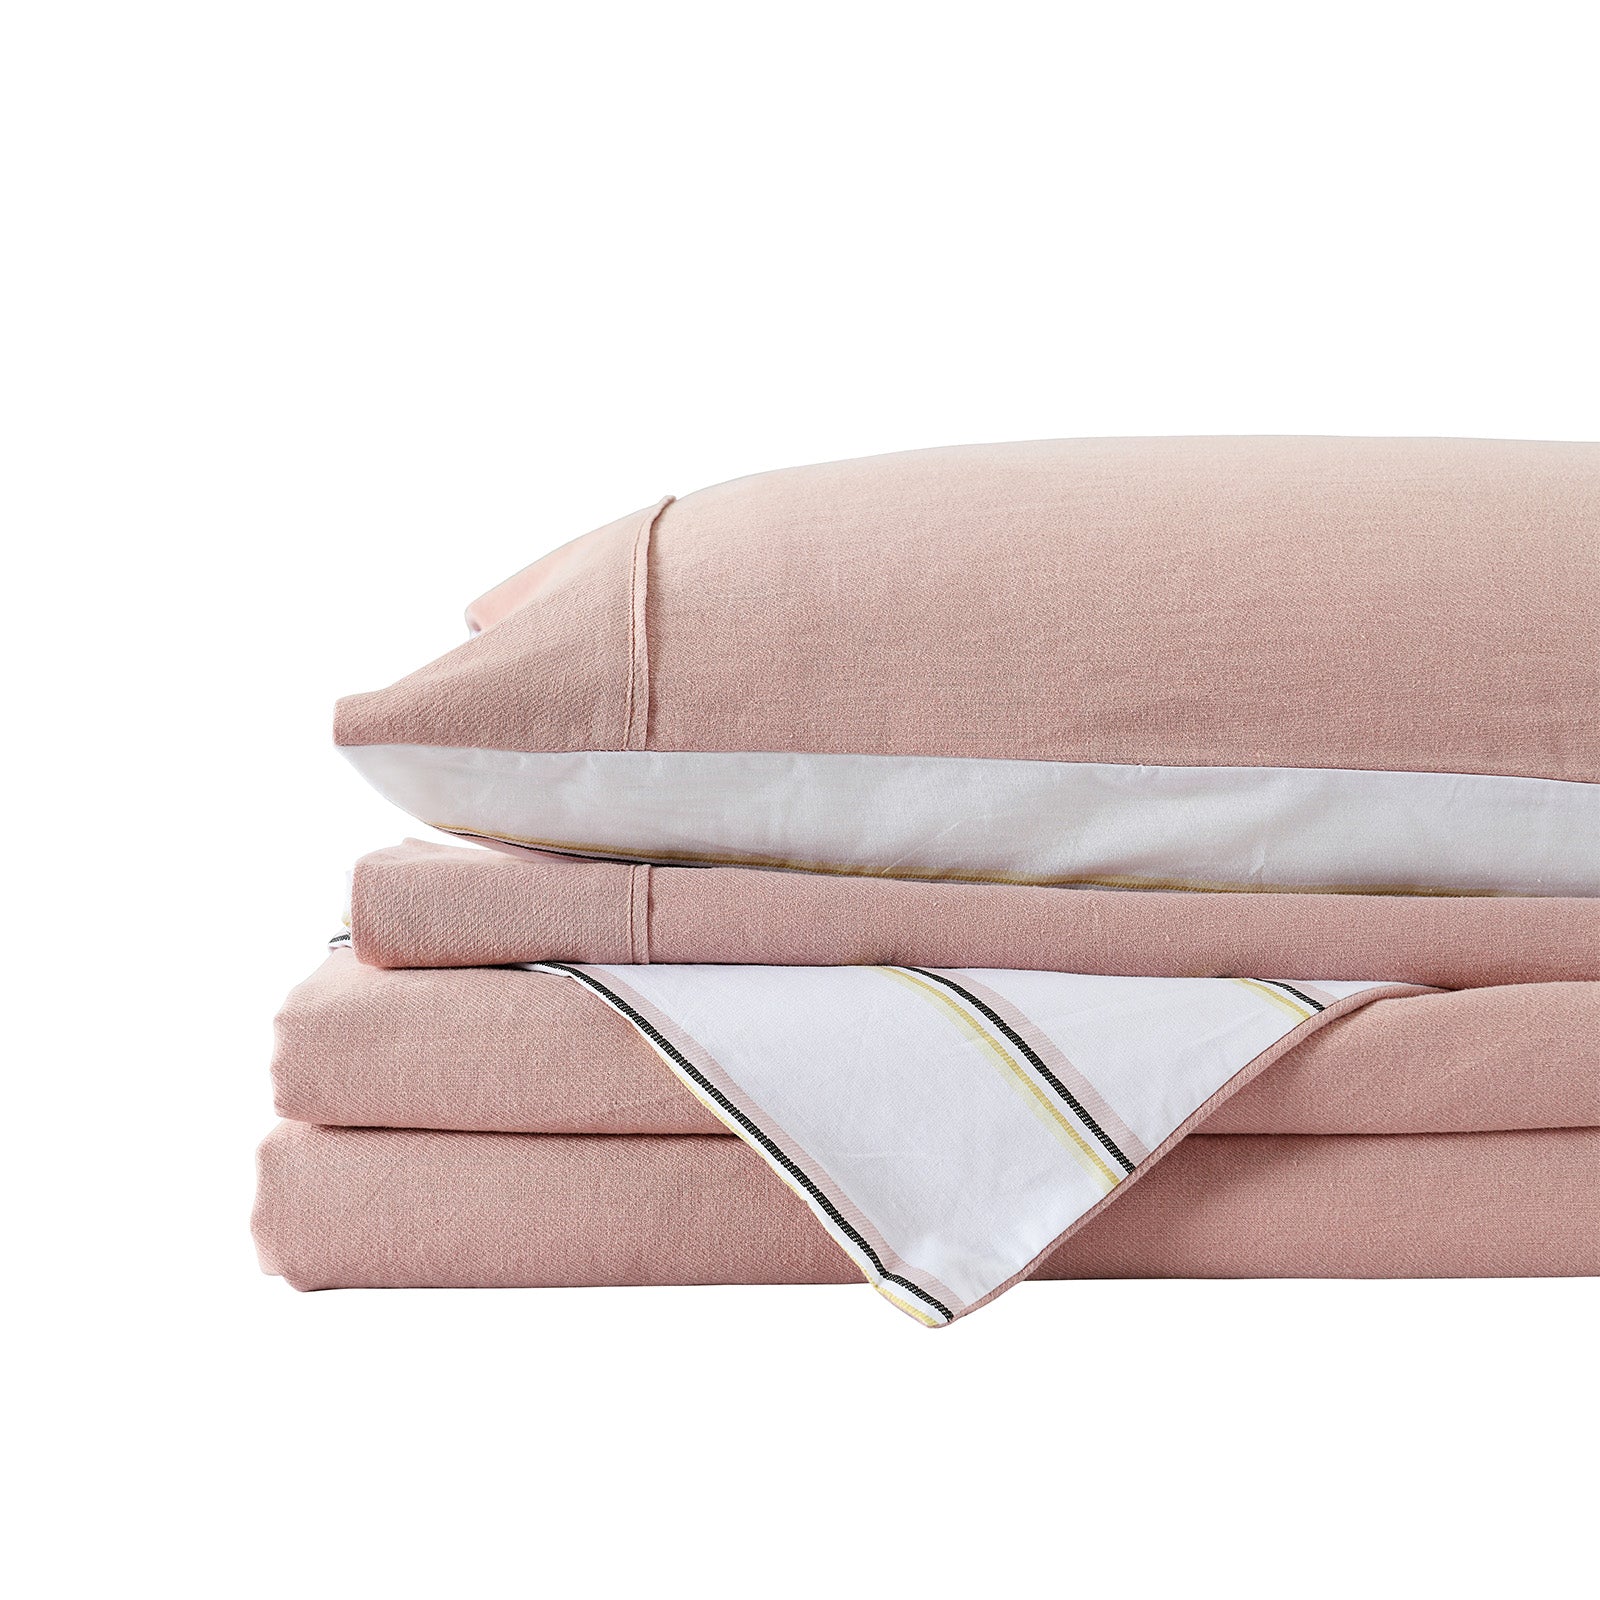 Hemp Braid Cotton Blend Quilt Cover Set Reverse Stripe Bedding - King - Dusk Pink